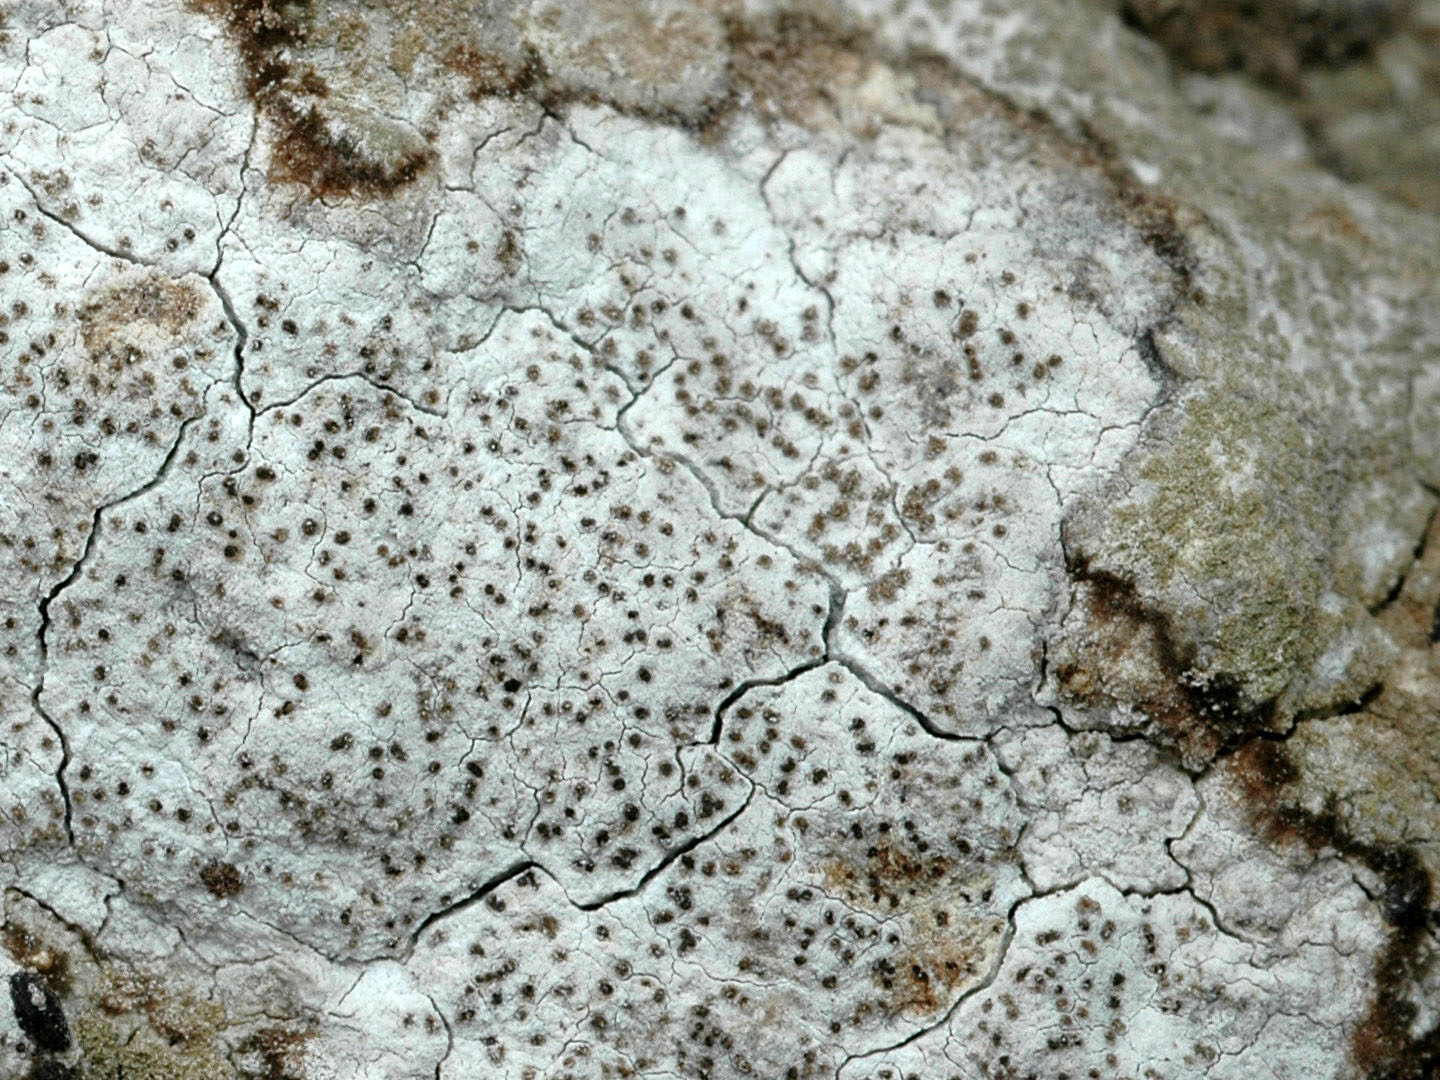 Lecanographa amylacea